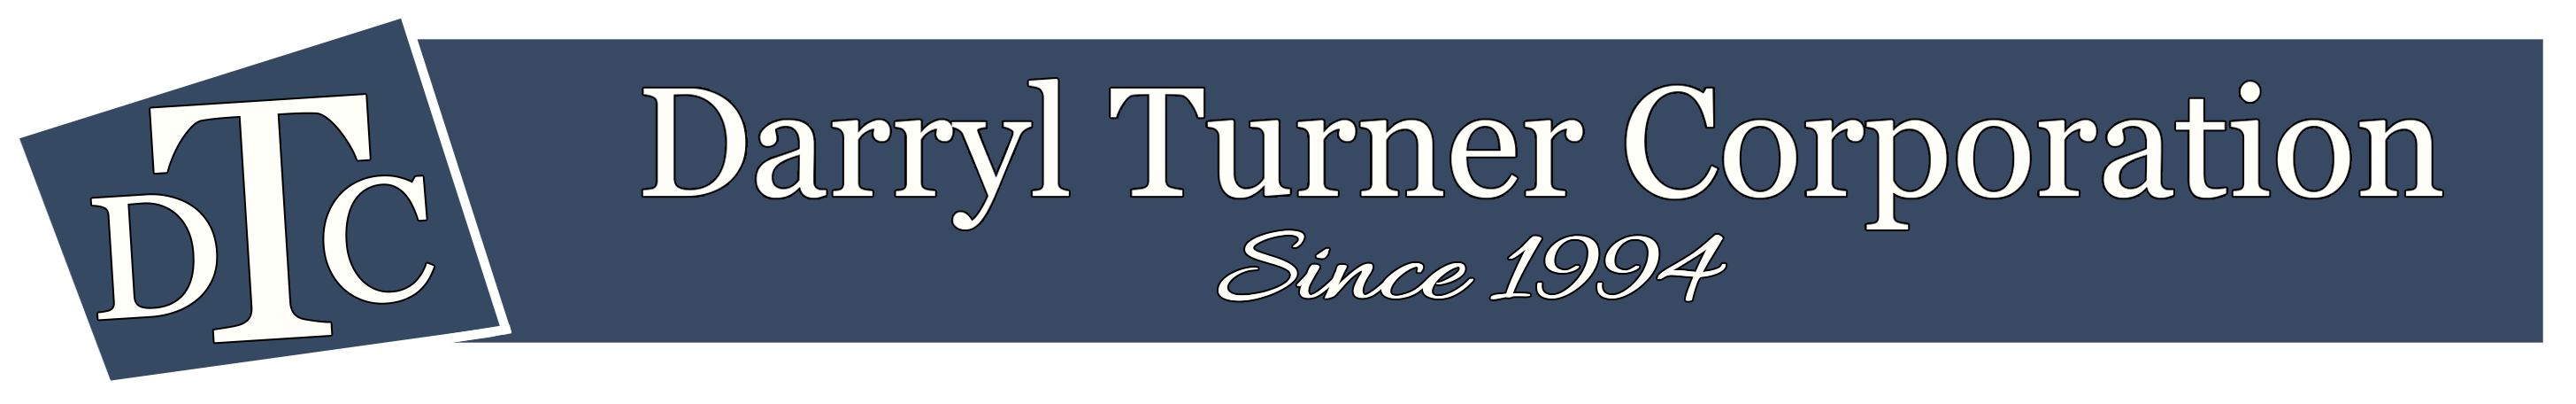 Darryl Turner Corporation